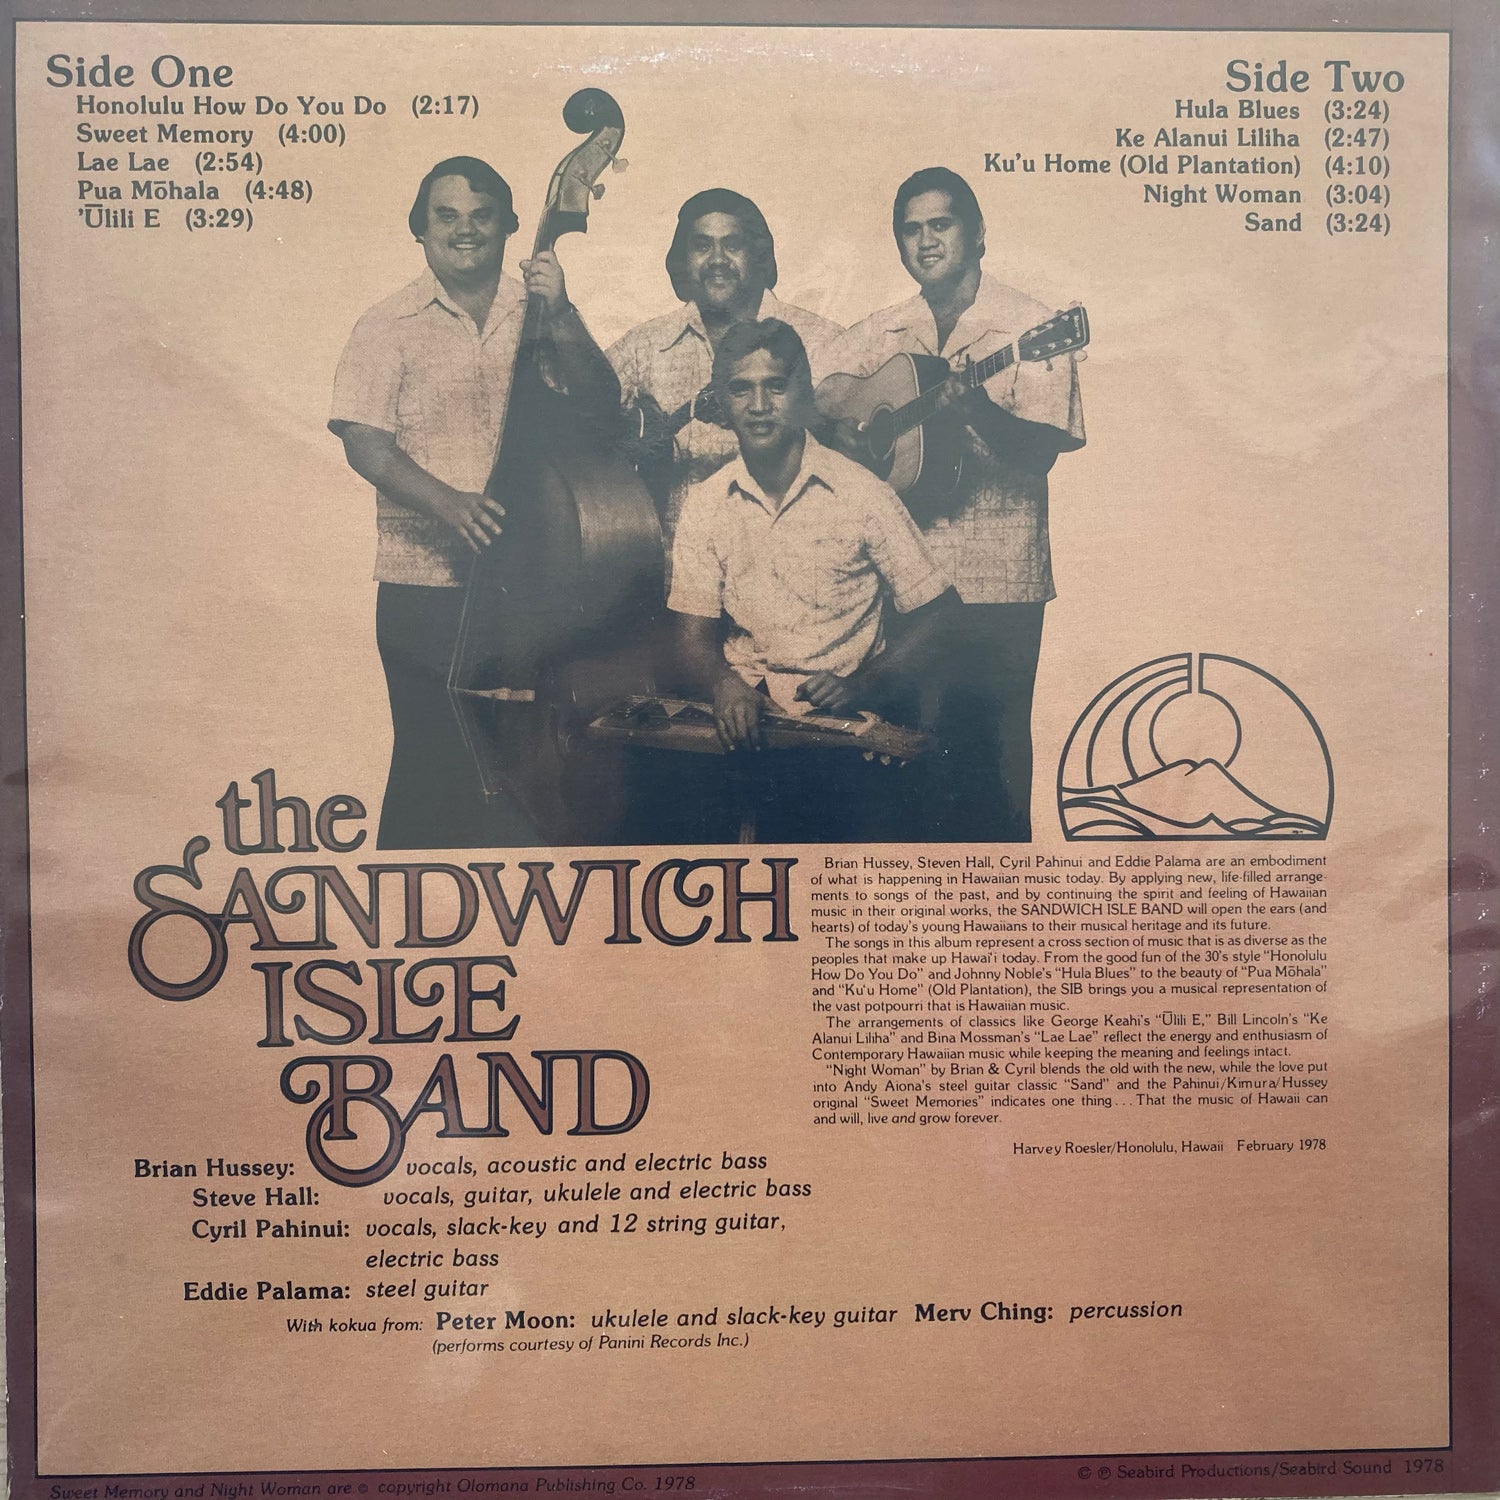 The Sandwich Isle Band